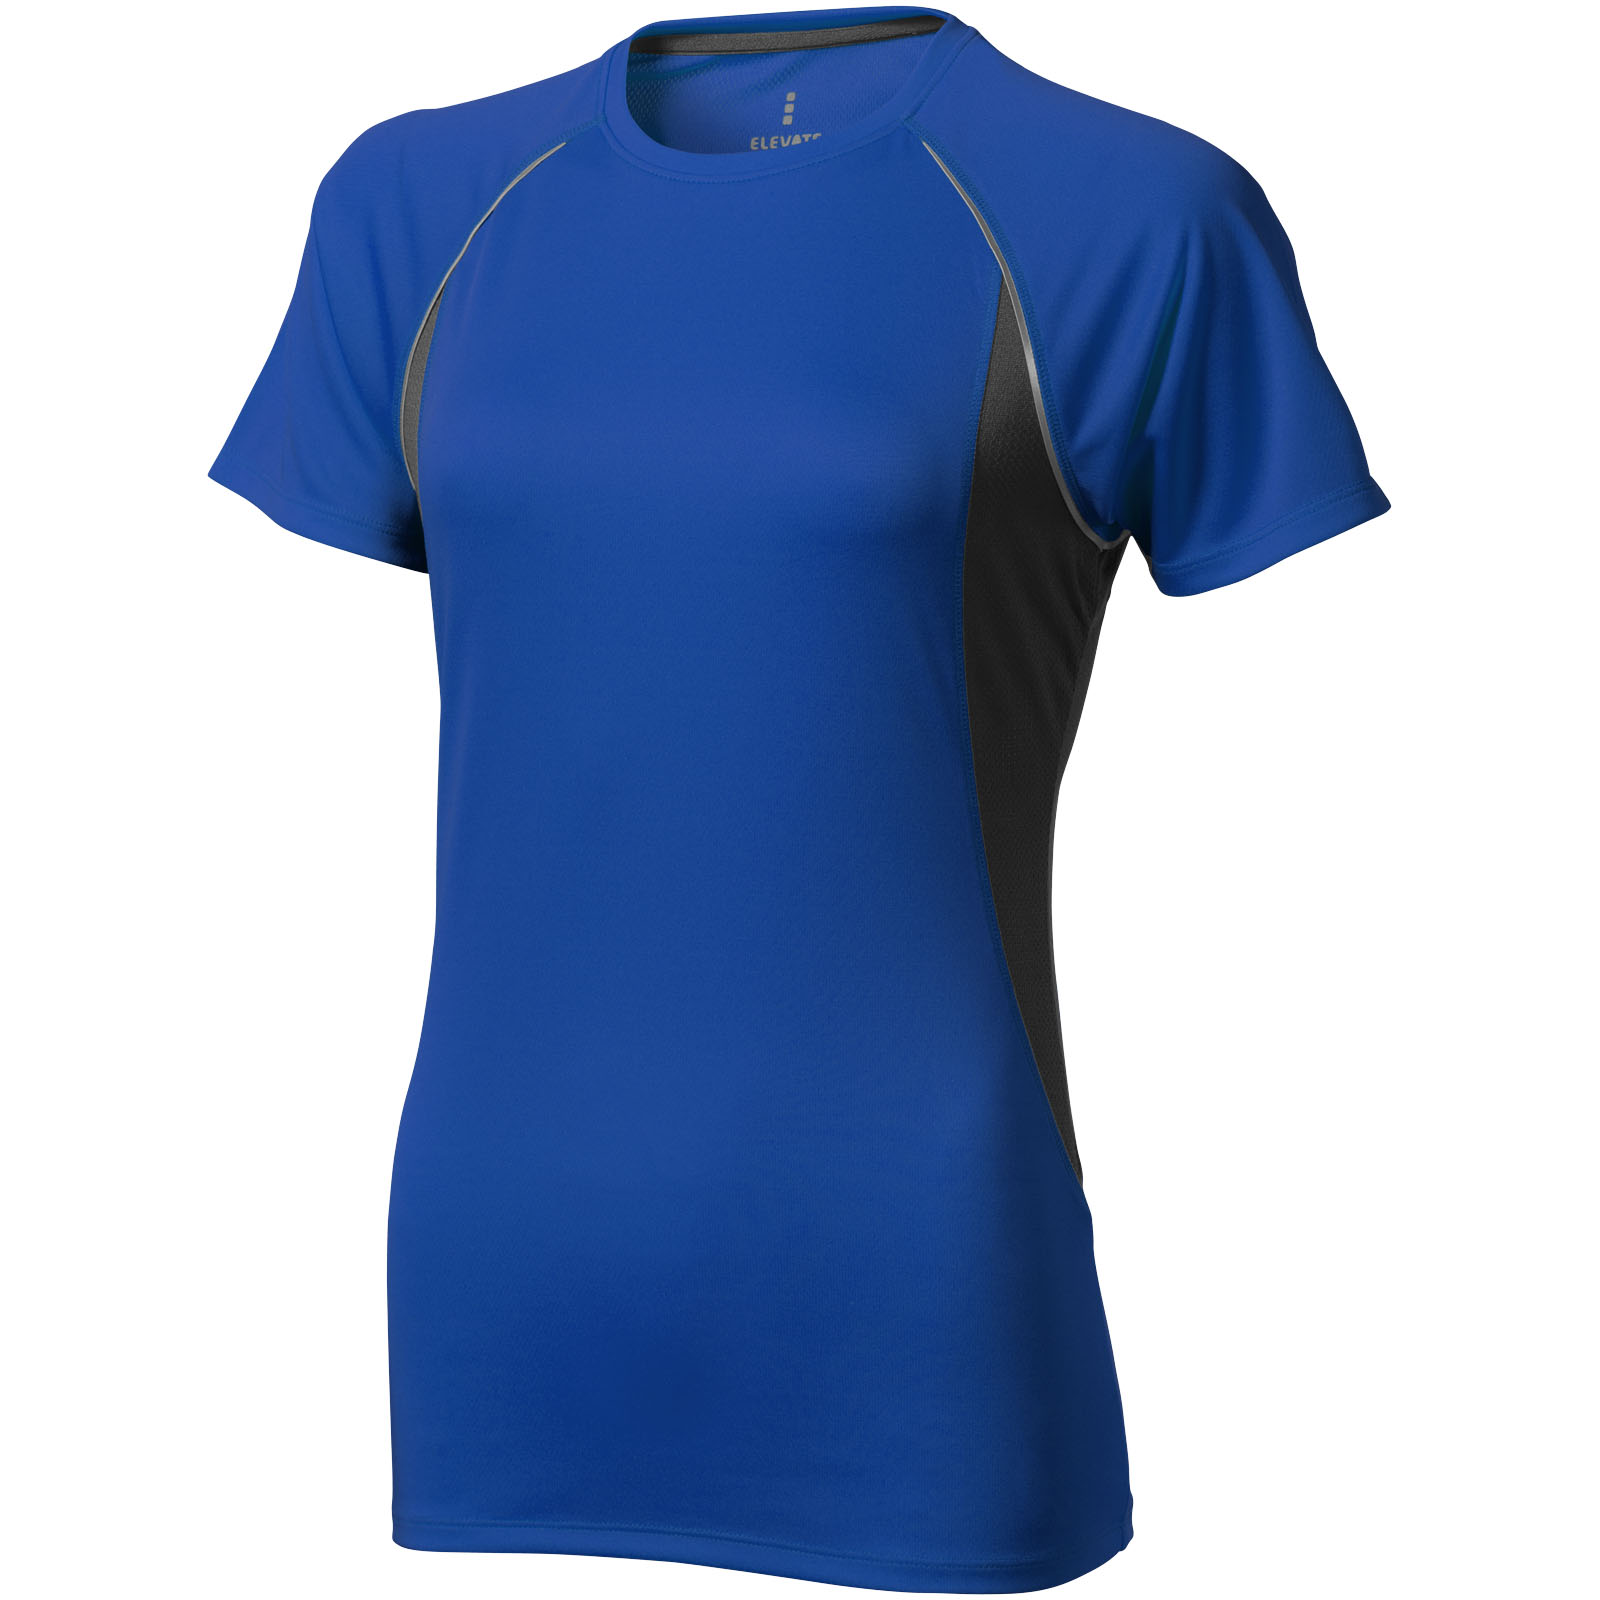 Advertising T-shirts - Quebec short sleeve women's cool fit t-shirt